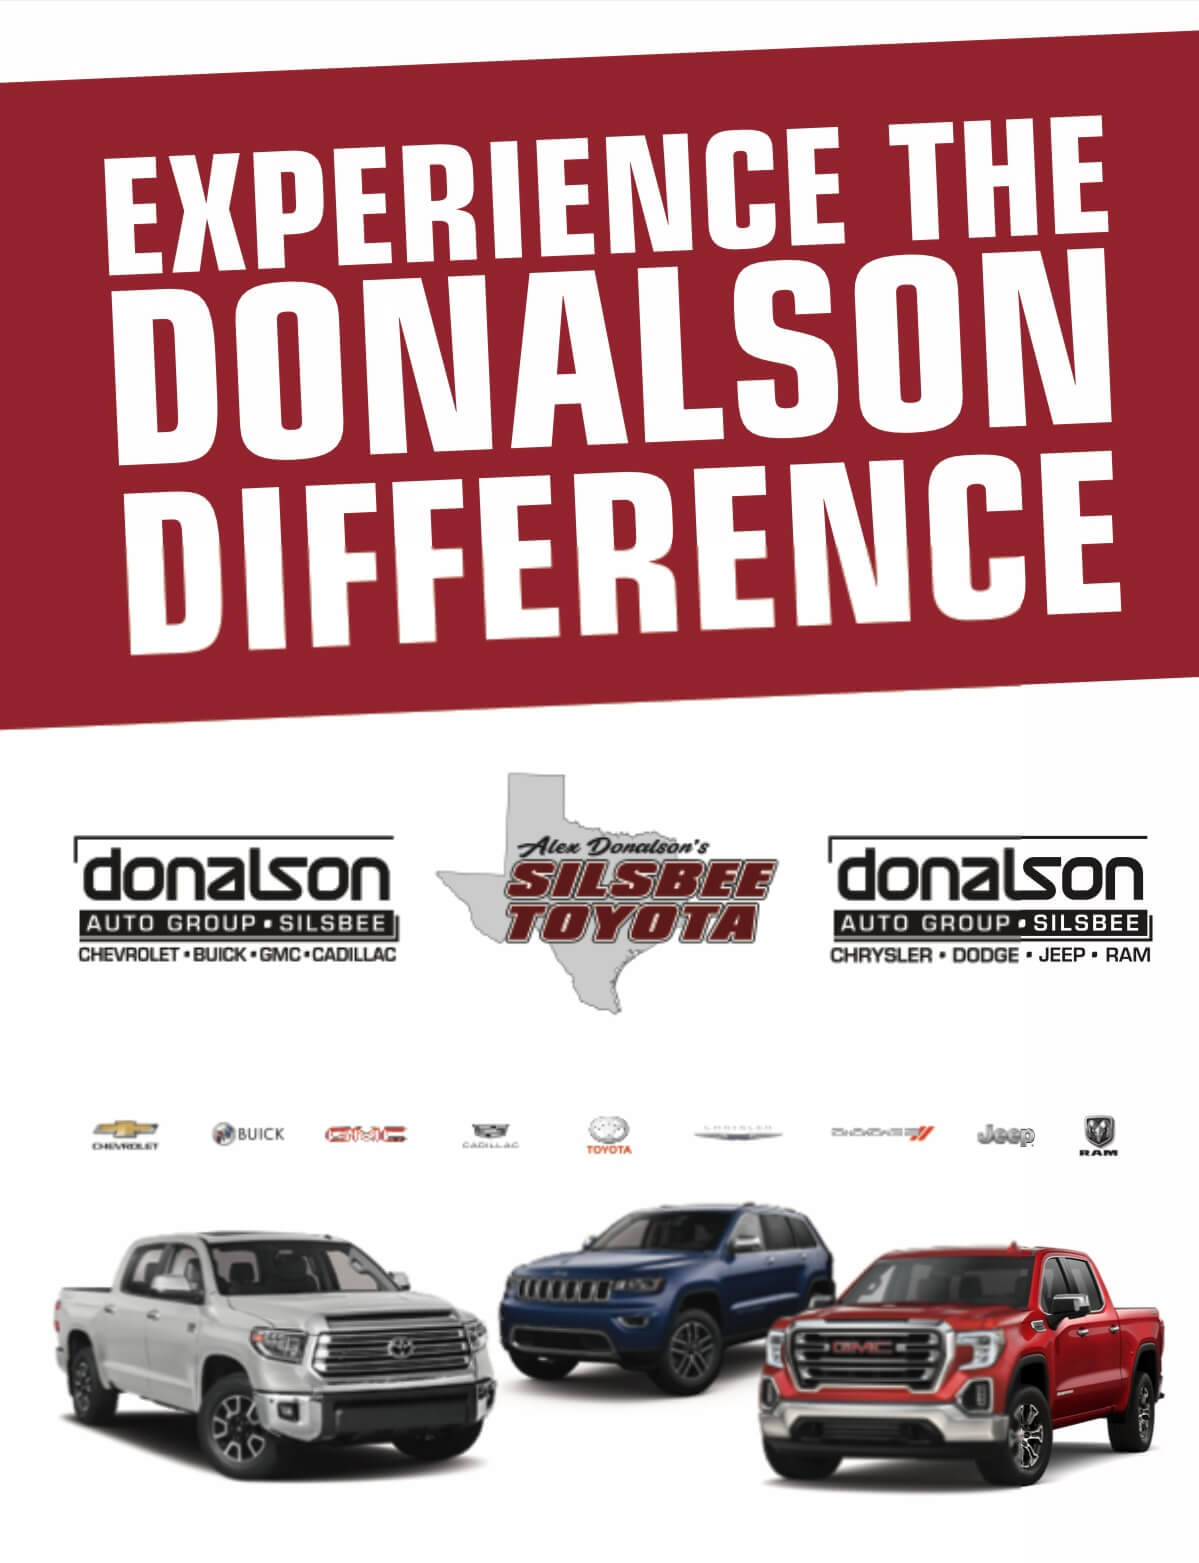 Print advertisement for auto dealership